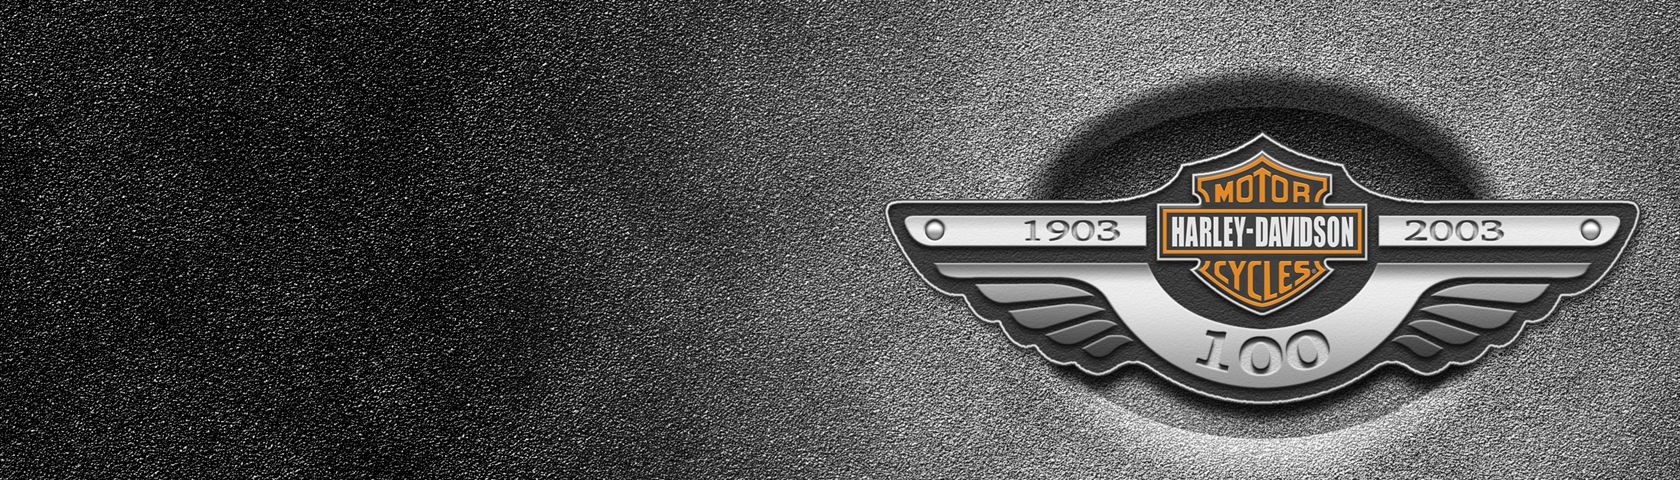 Harley Davidson 100th Anniversary